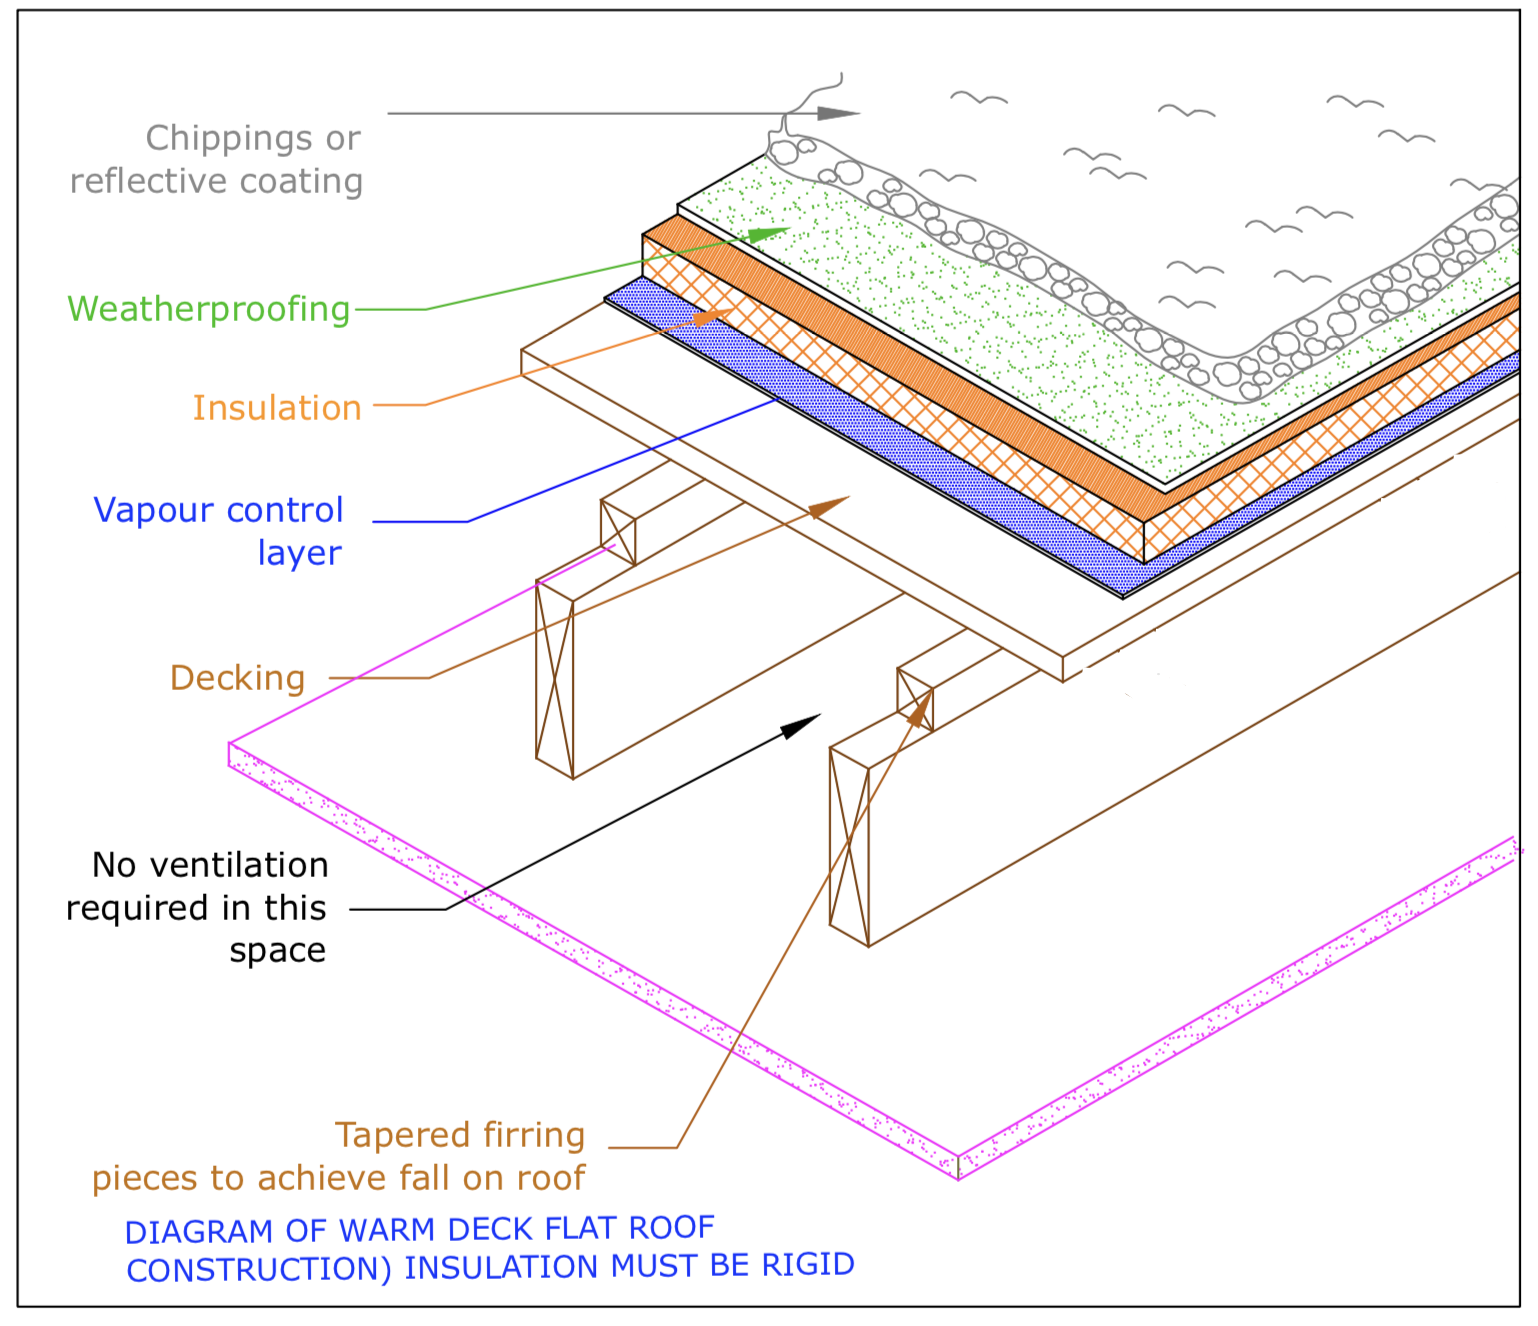 Diagram D73 - Typical warm deck roof detail